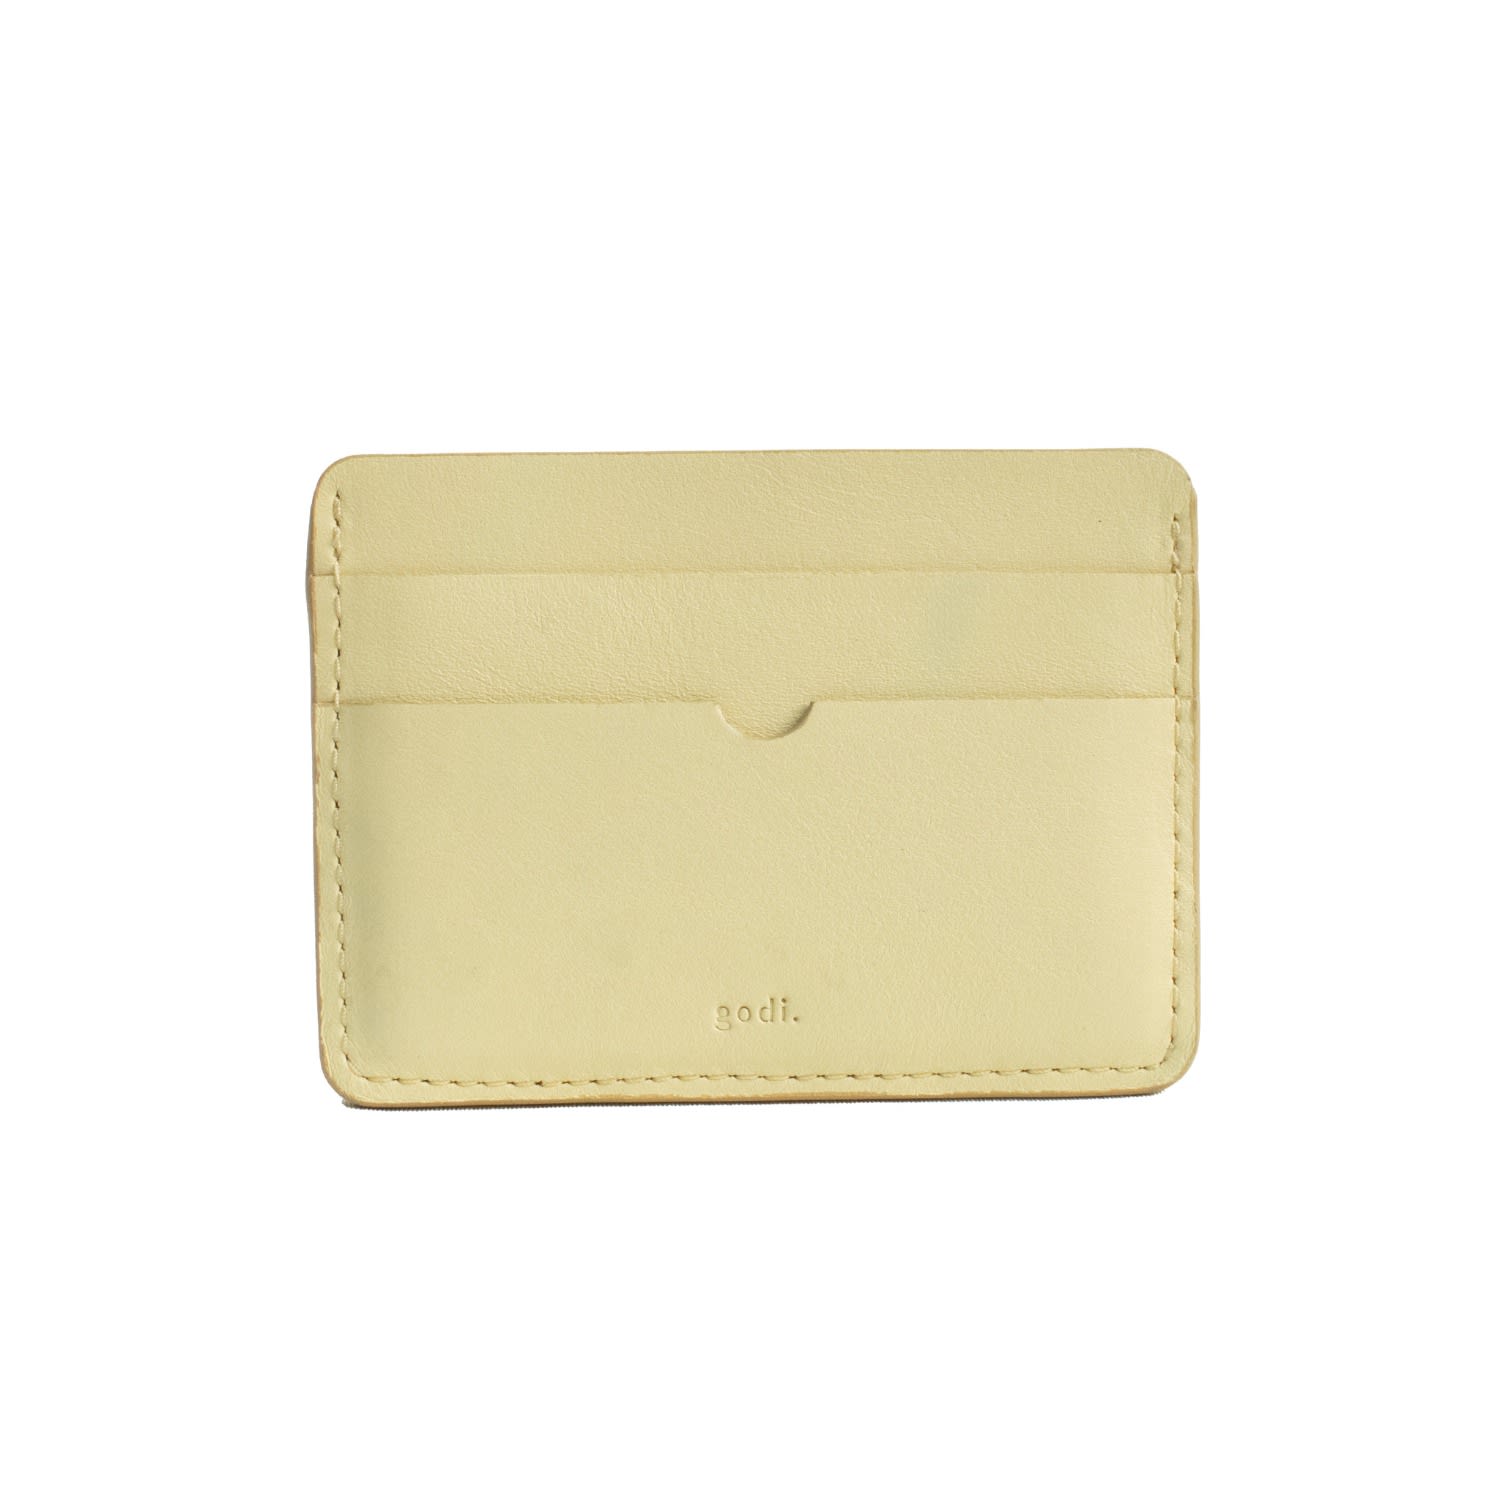 Godi. Women's Gold / White Handmade Leather Card Case - French Vanilla In Yellow